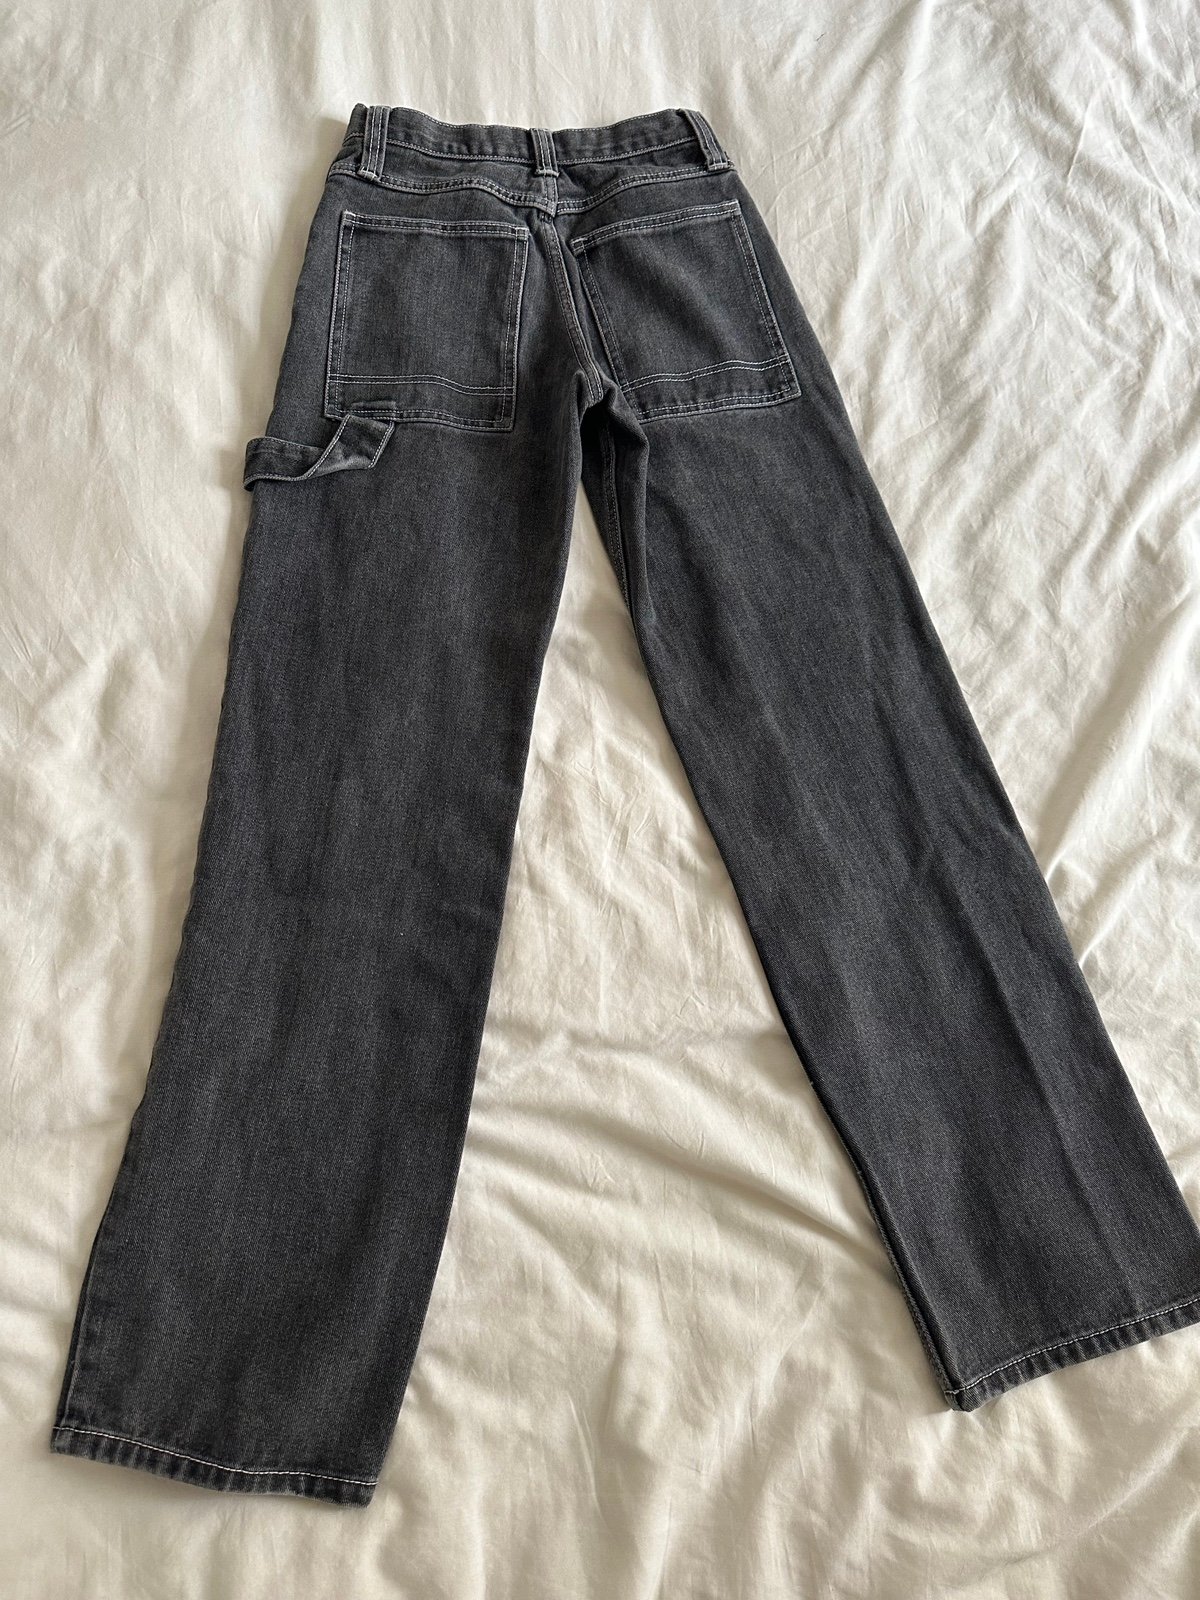 The Best Seller Pacsun jeans NRVodDMQ5 Wholesale